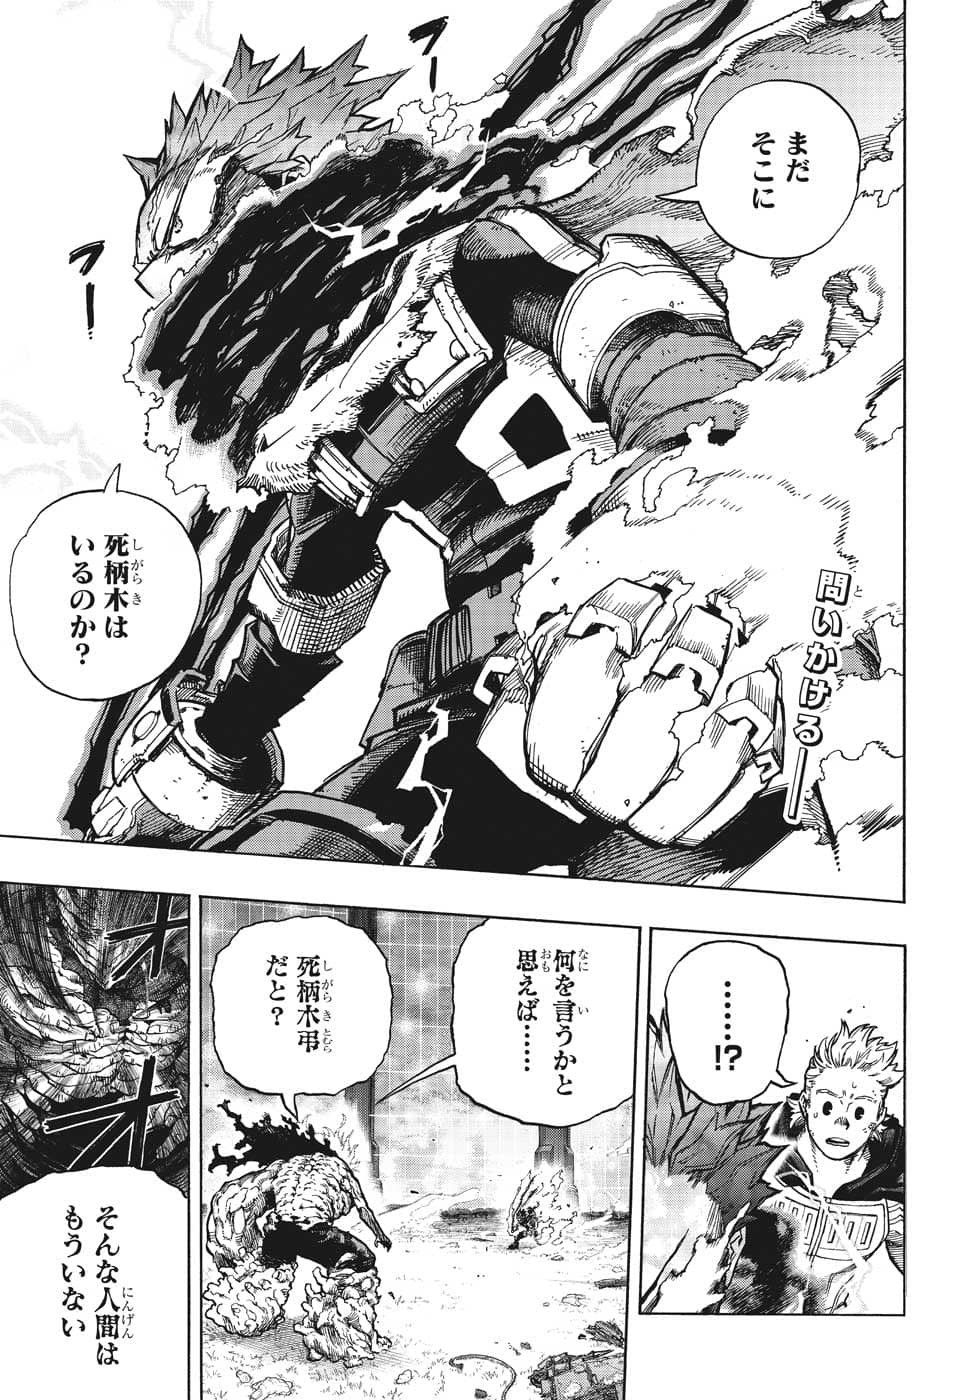 Boku no Hero Academia - Chapter 368 - Page 2